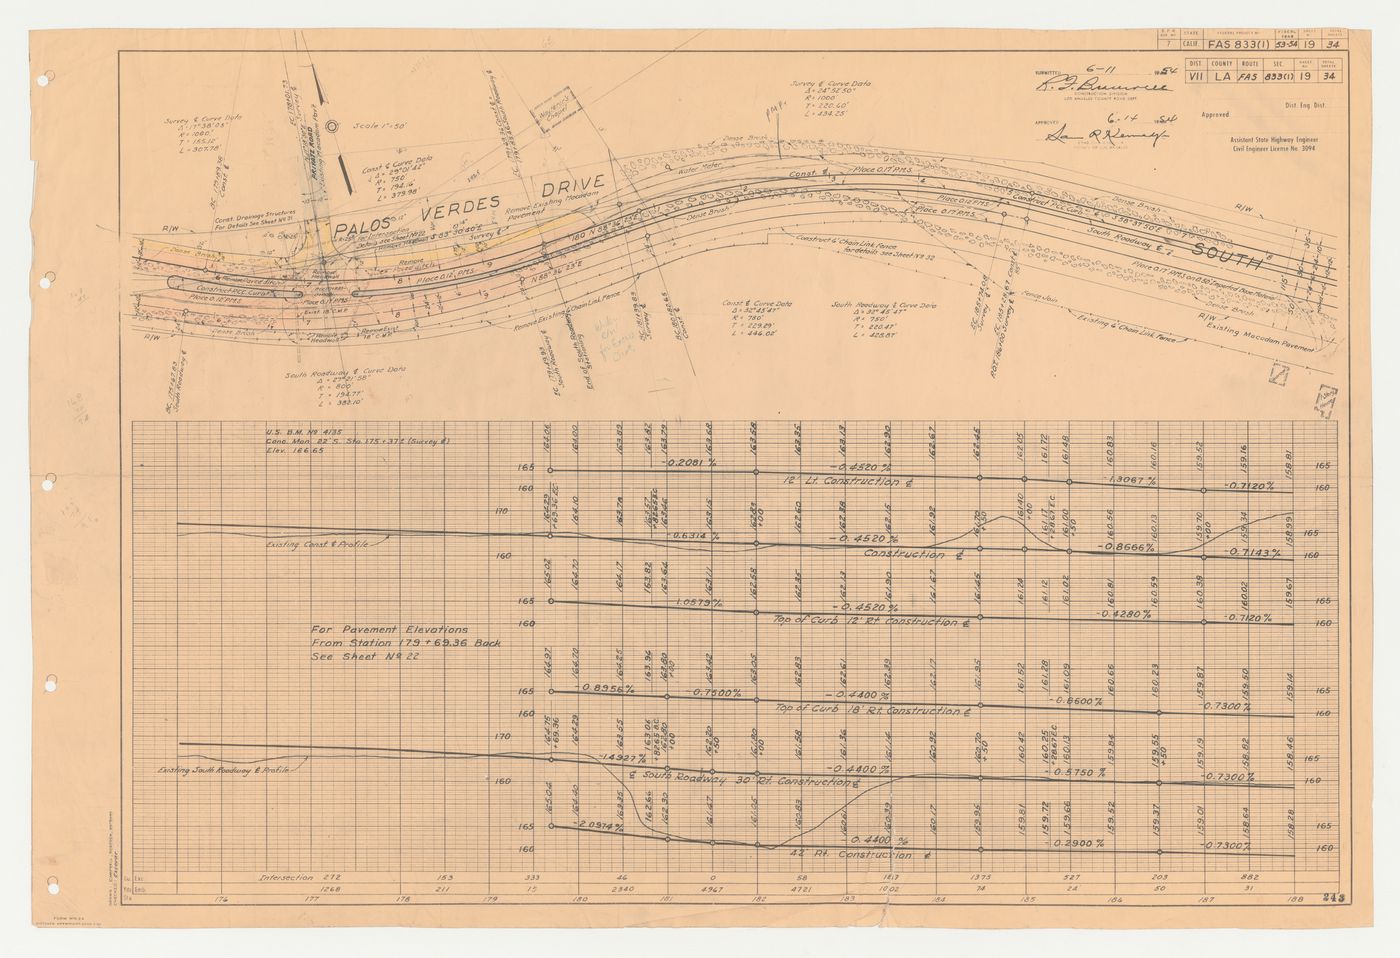 Wayfarers' Chapel, Palos Verdes, California: Survey and curve data for the development of Palos Verdes Drive South into a highway